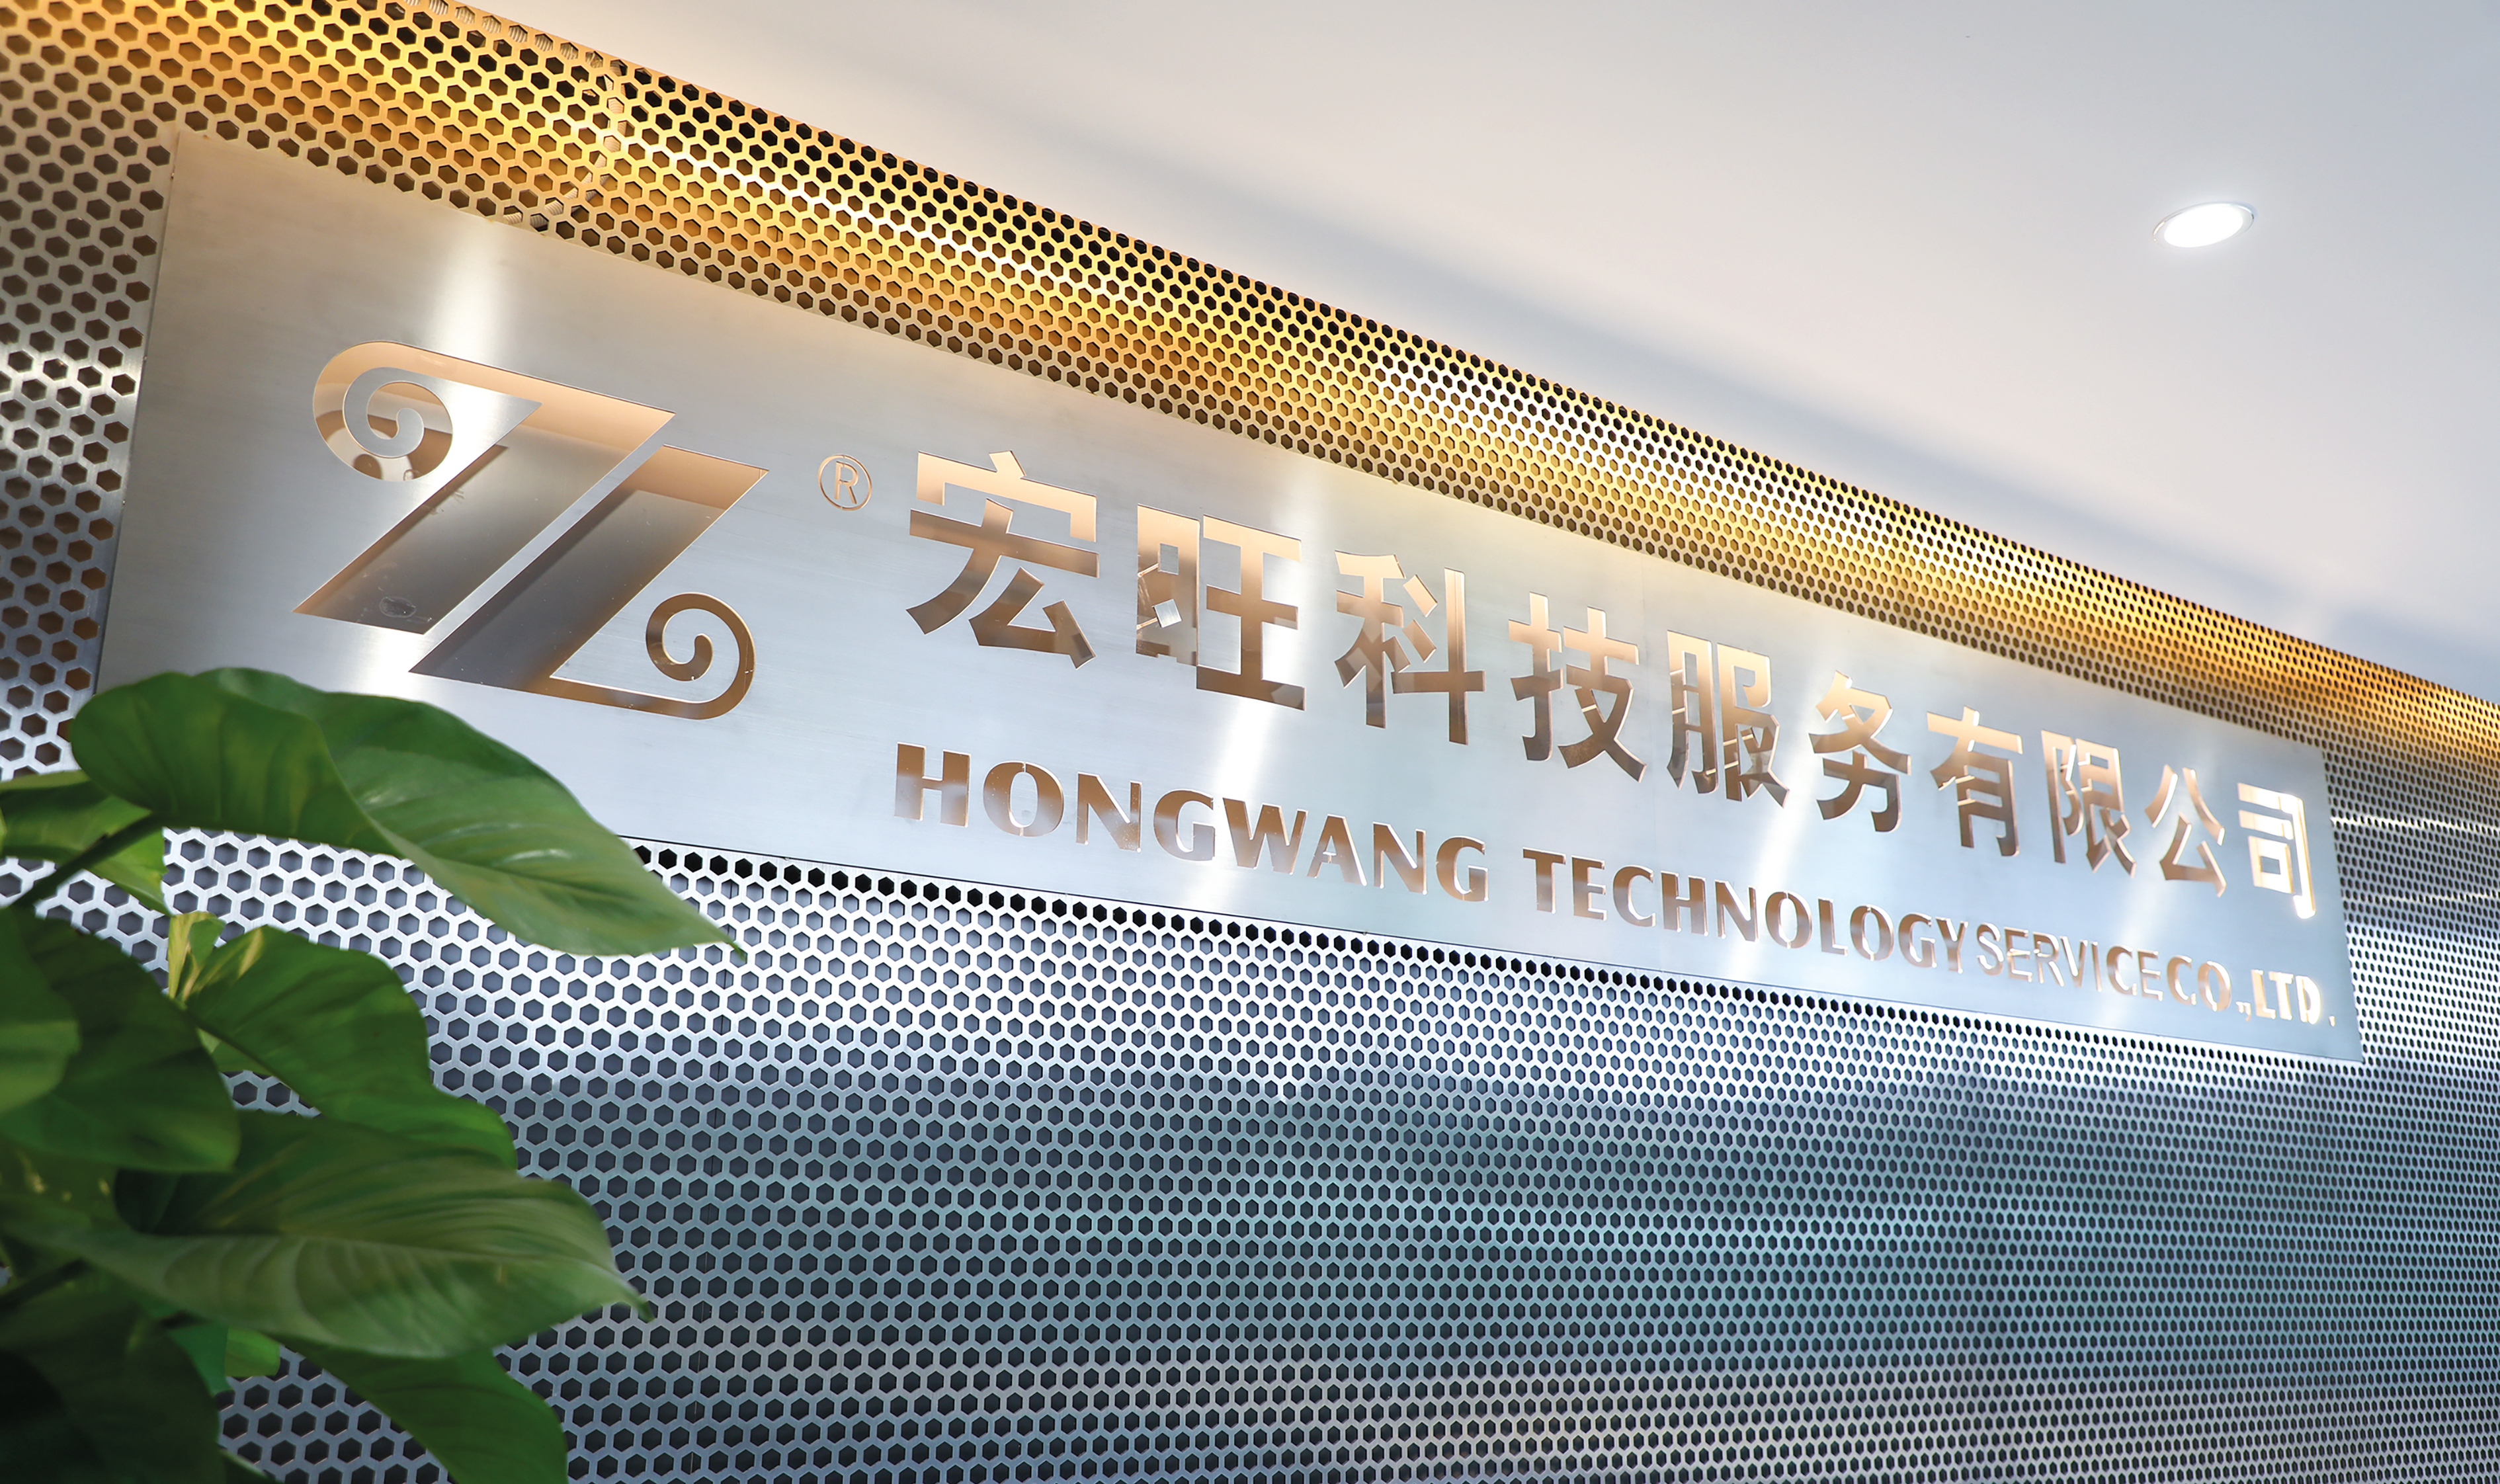 Hongwang Technology